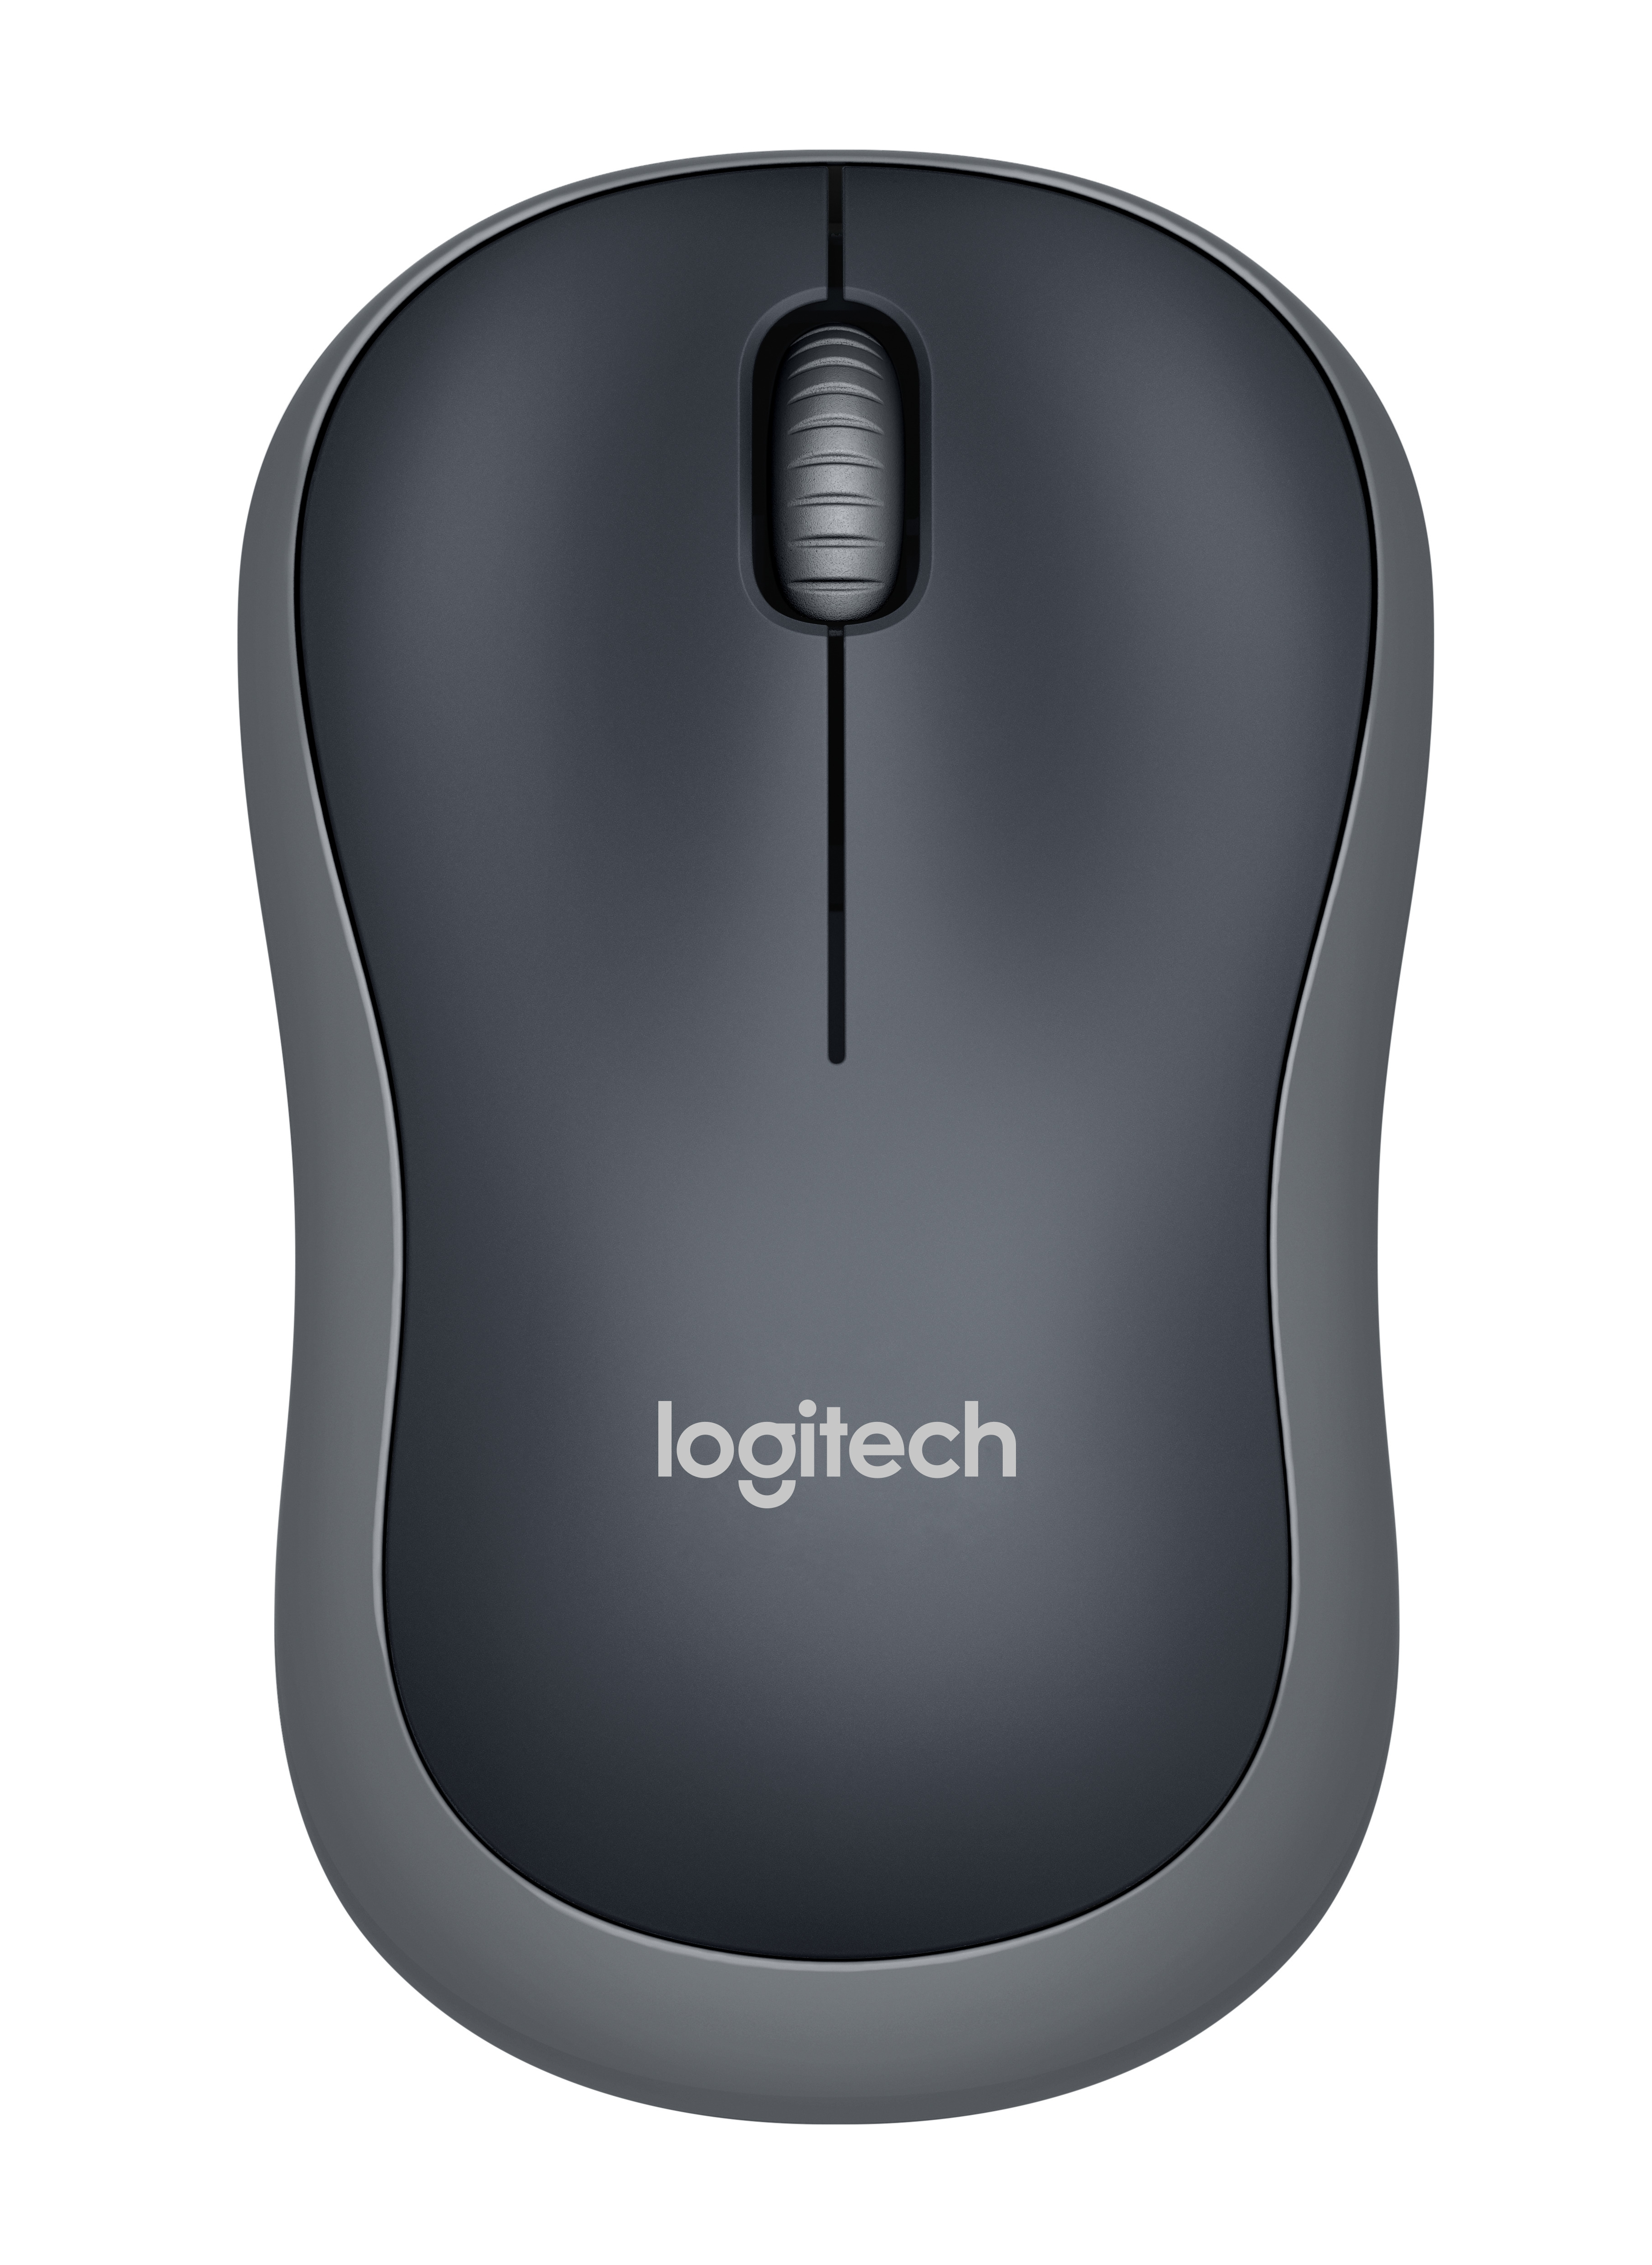 logitech mouse mac